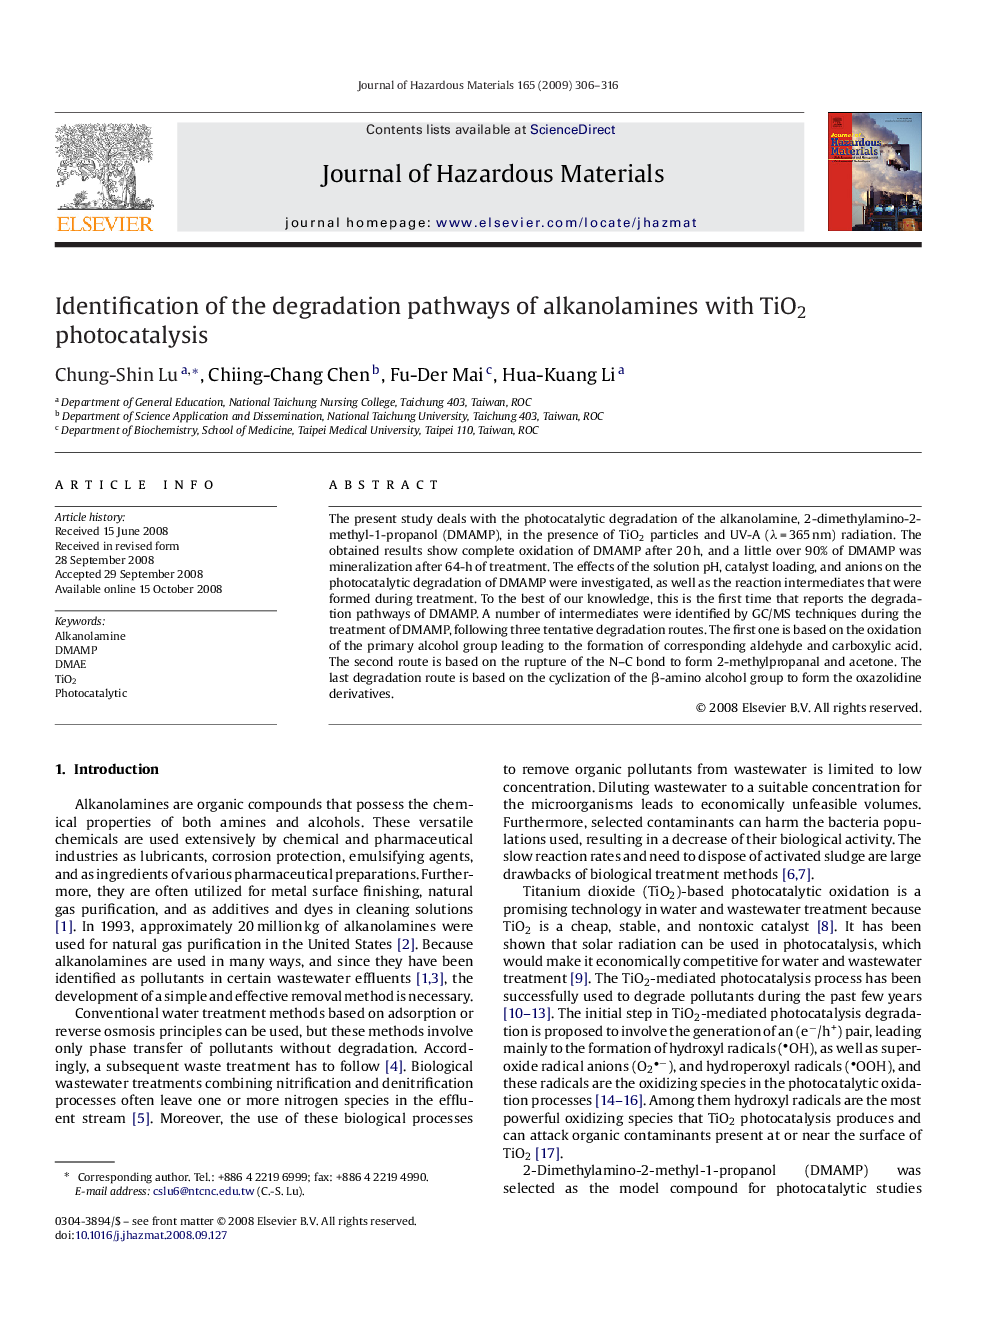 Identification of the degradation pathways of alkanolamines with TiO2 photocatalysis